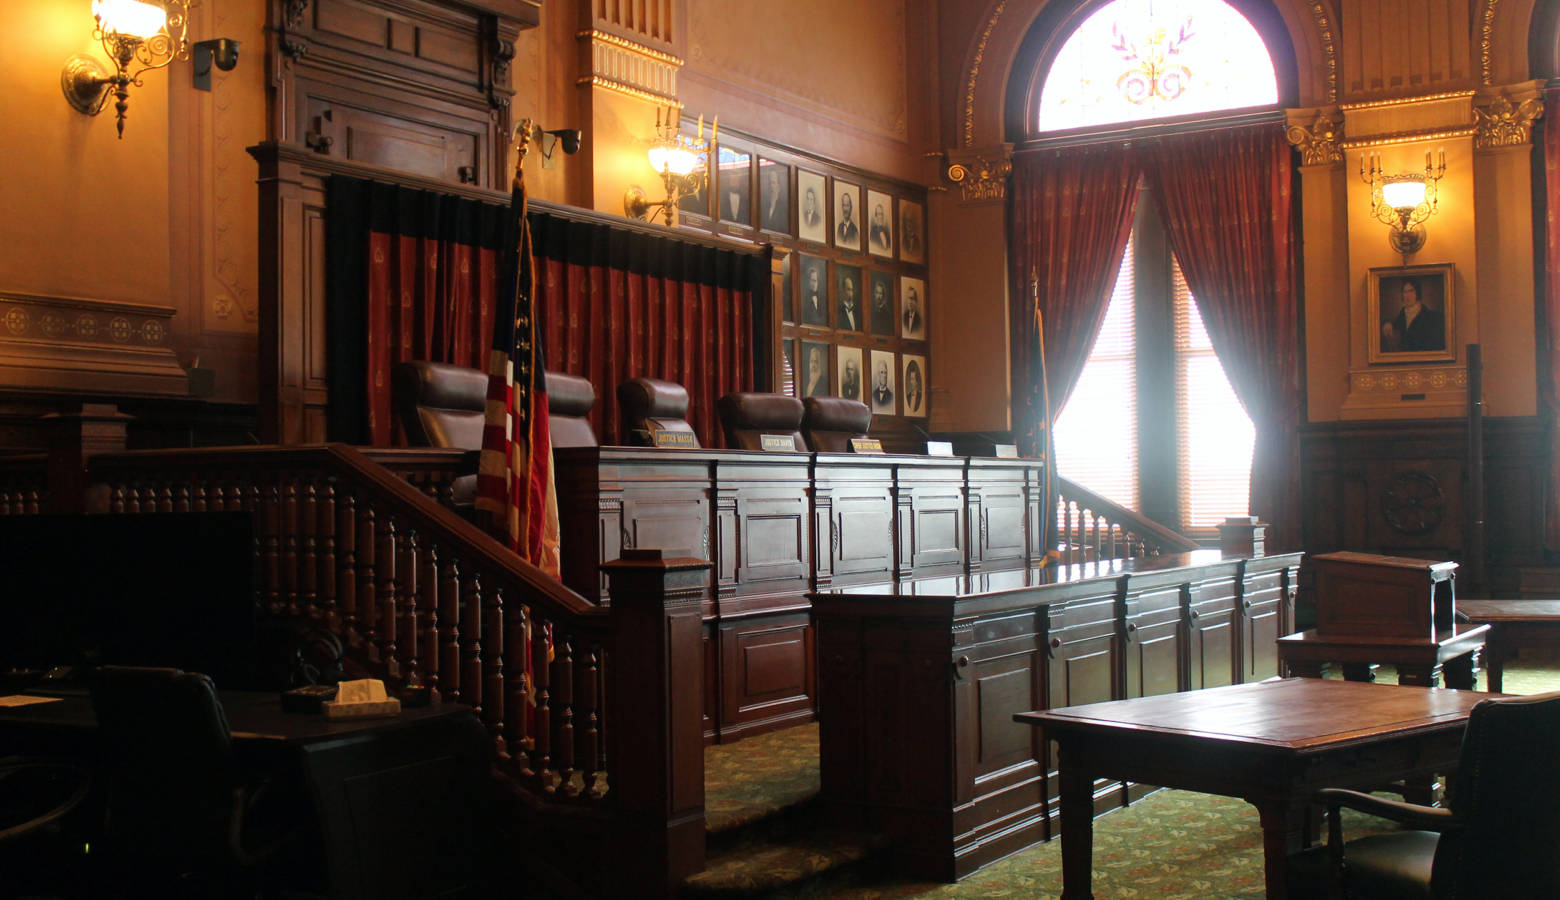 The Indiana Supreme Court chamber. (Lauren Chapman/IPB News)